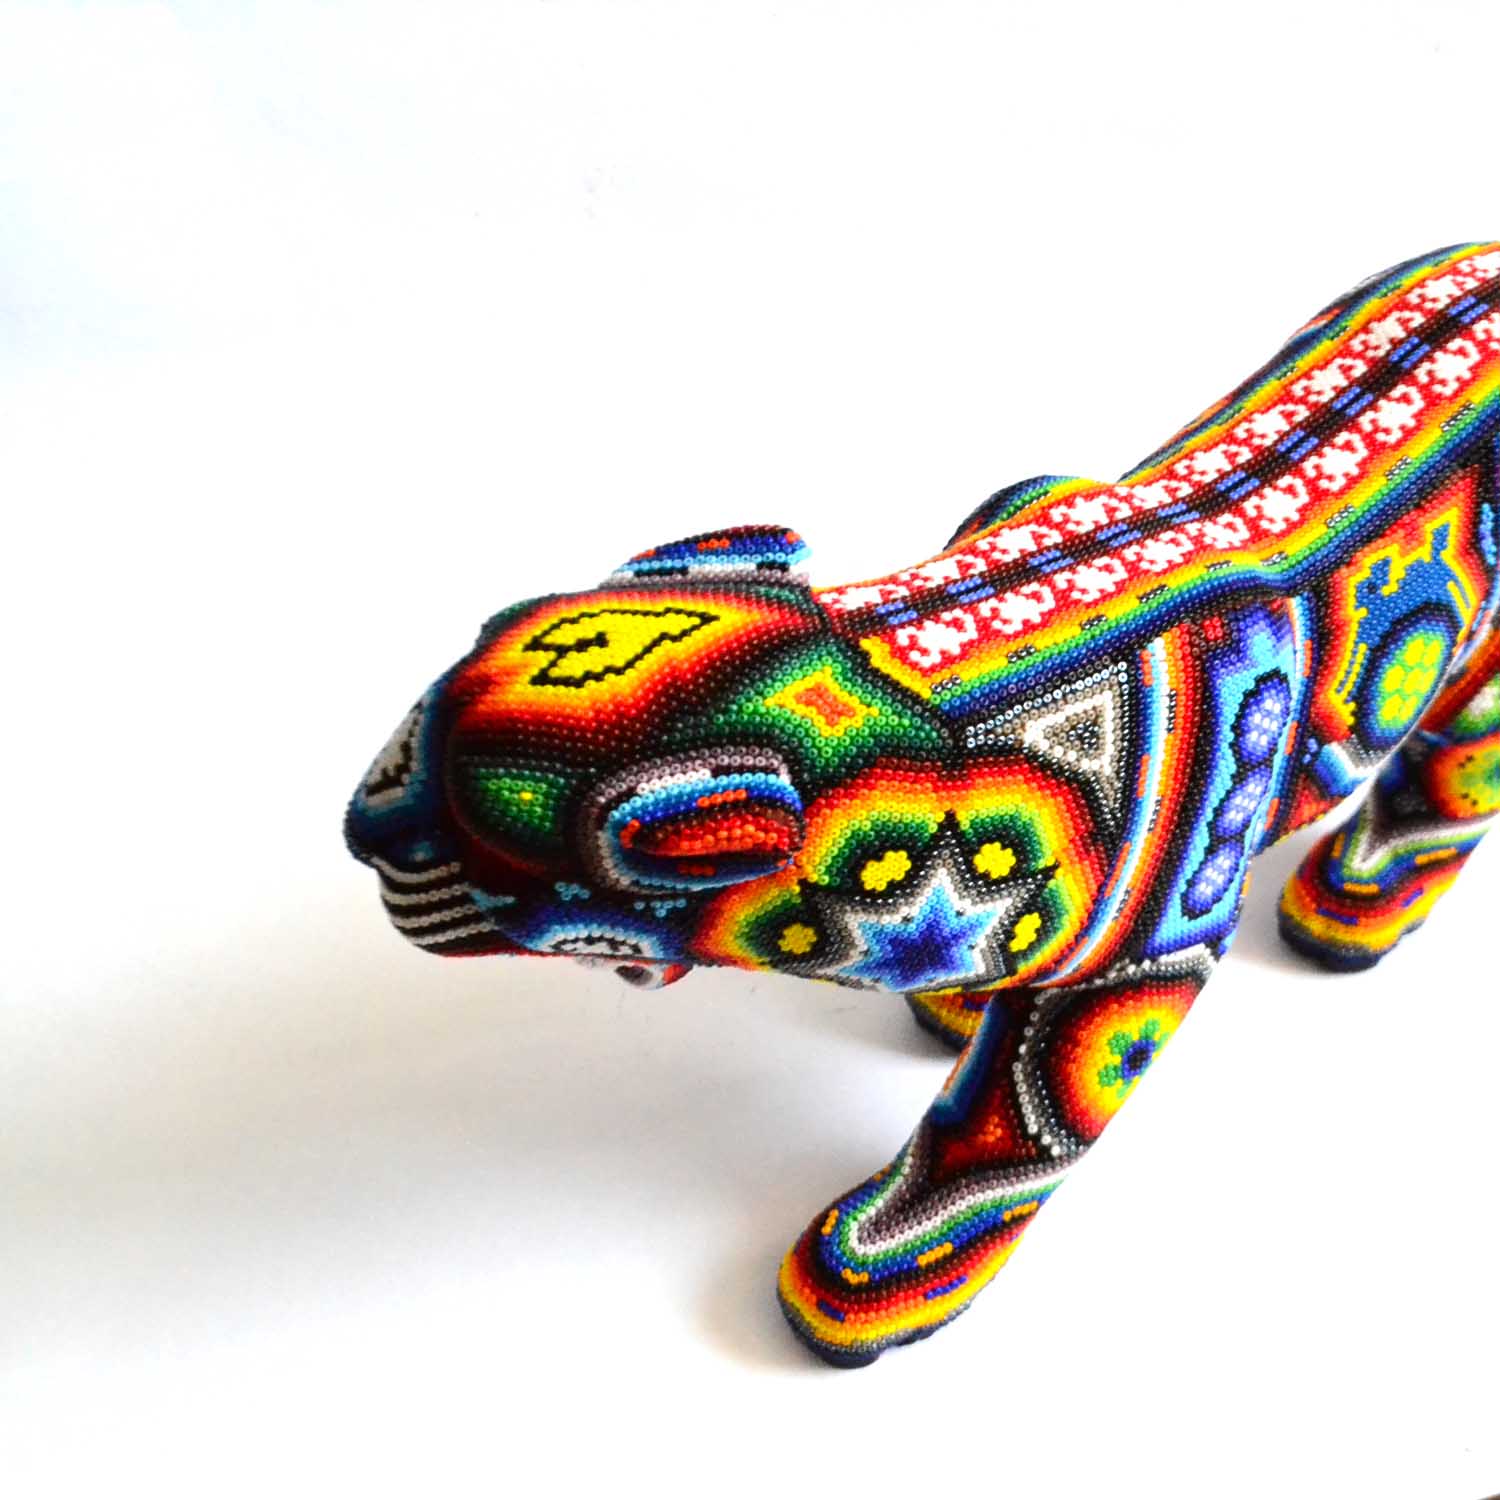 Jaguar - Huichol art